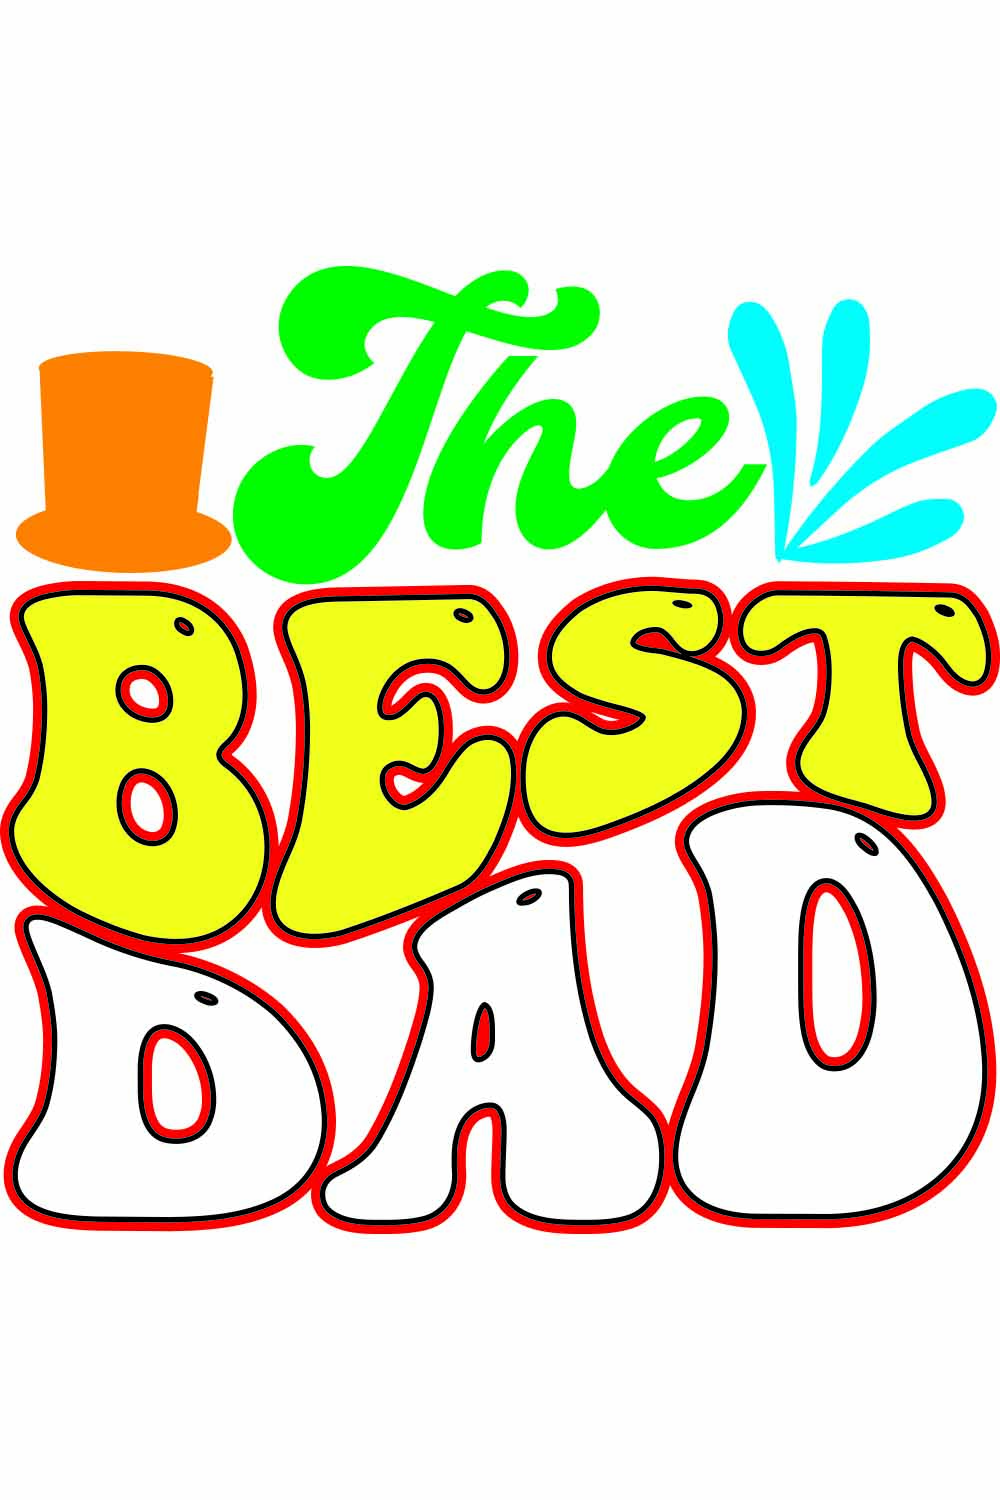 The Best Dad Retro t-shirt Designs pinterest preview image.